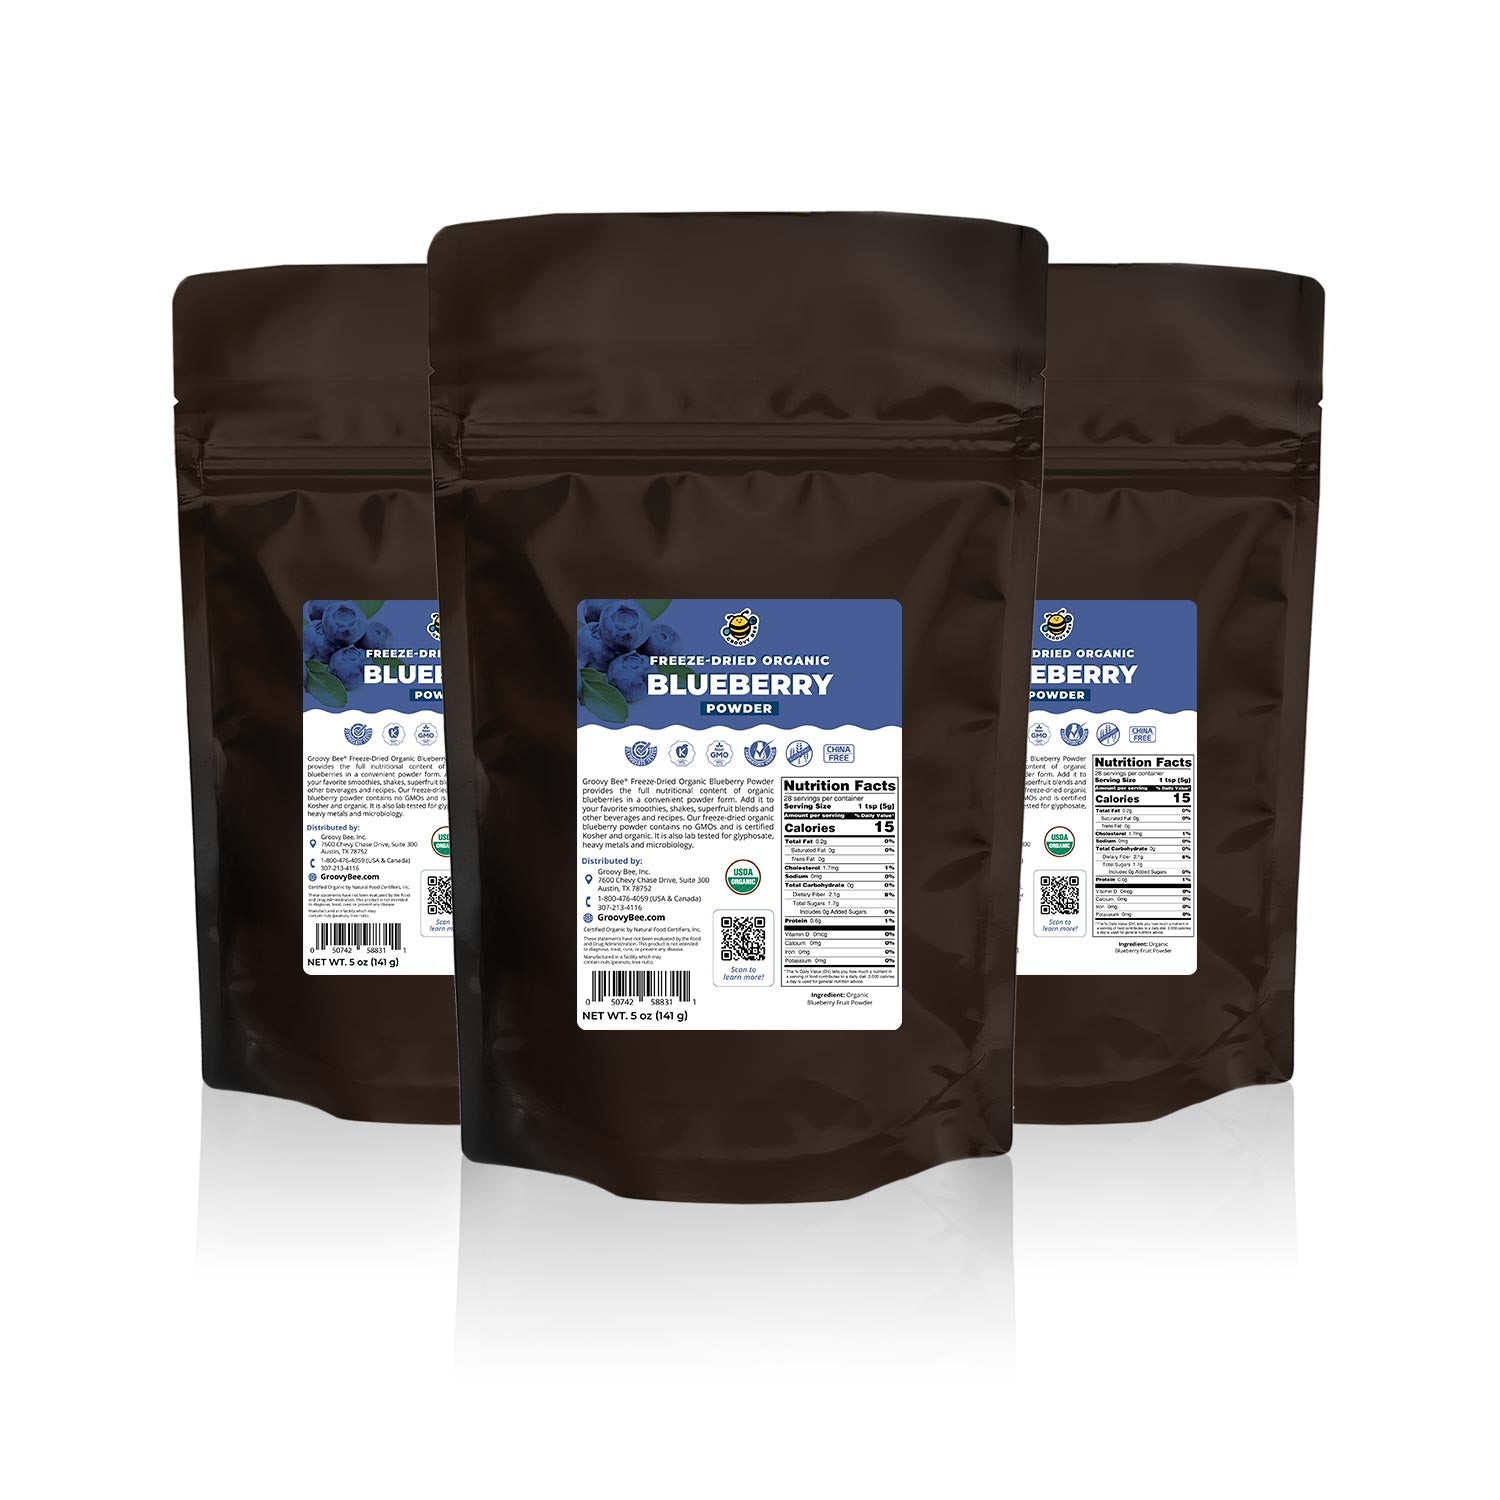 Freeze-Dried Organic Blueberry Powder 5oz (141g) (3-Pack)